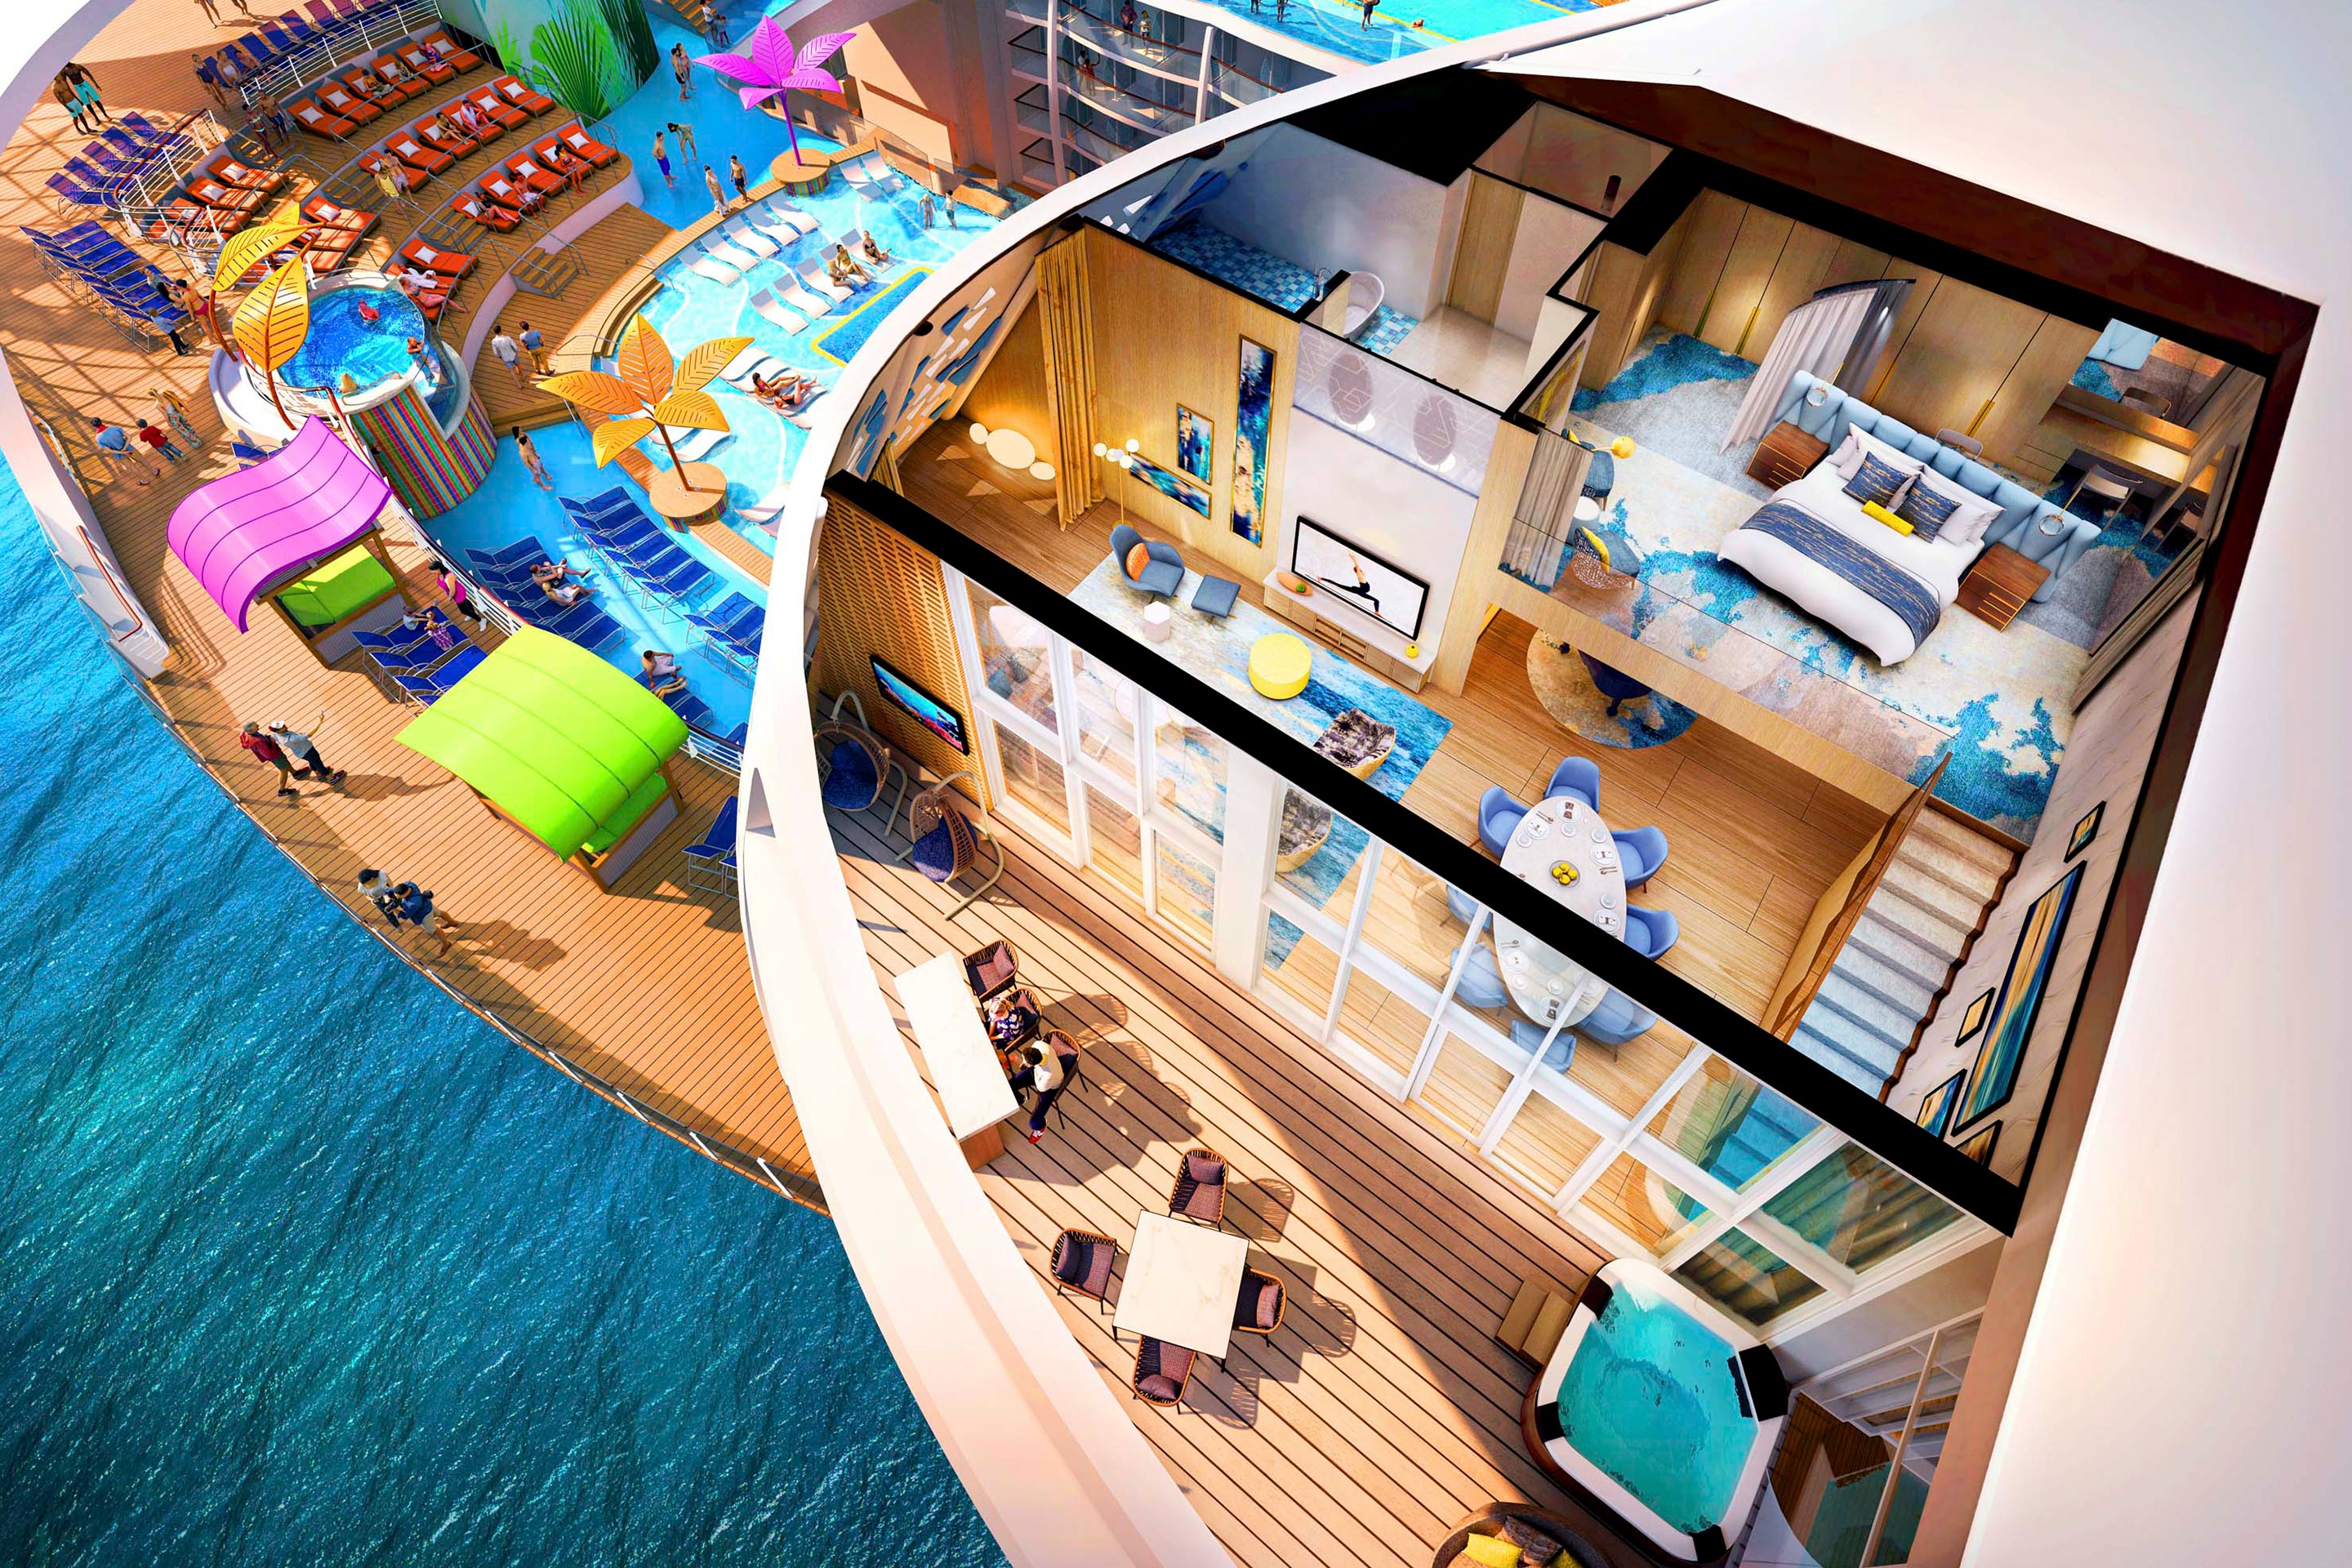 Image of Loft Suite, sourced from Royal Caribbean International https://www.royalcaribbean.com/content/dam/royal/accommodations/wonder/wonder-of-the-seas-royal-loft-suite-render.jpg